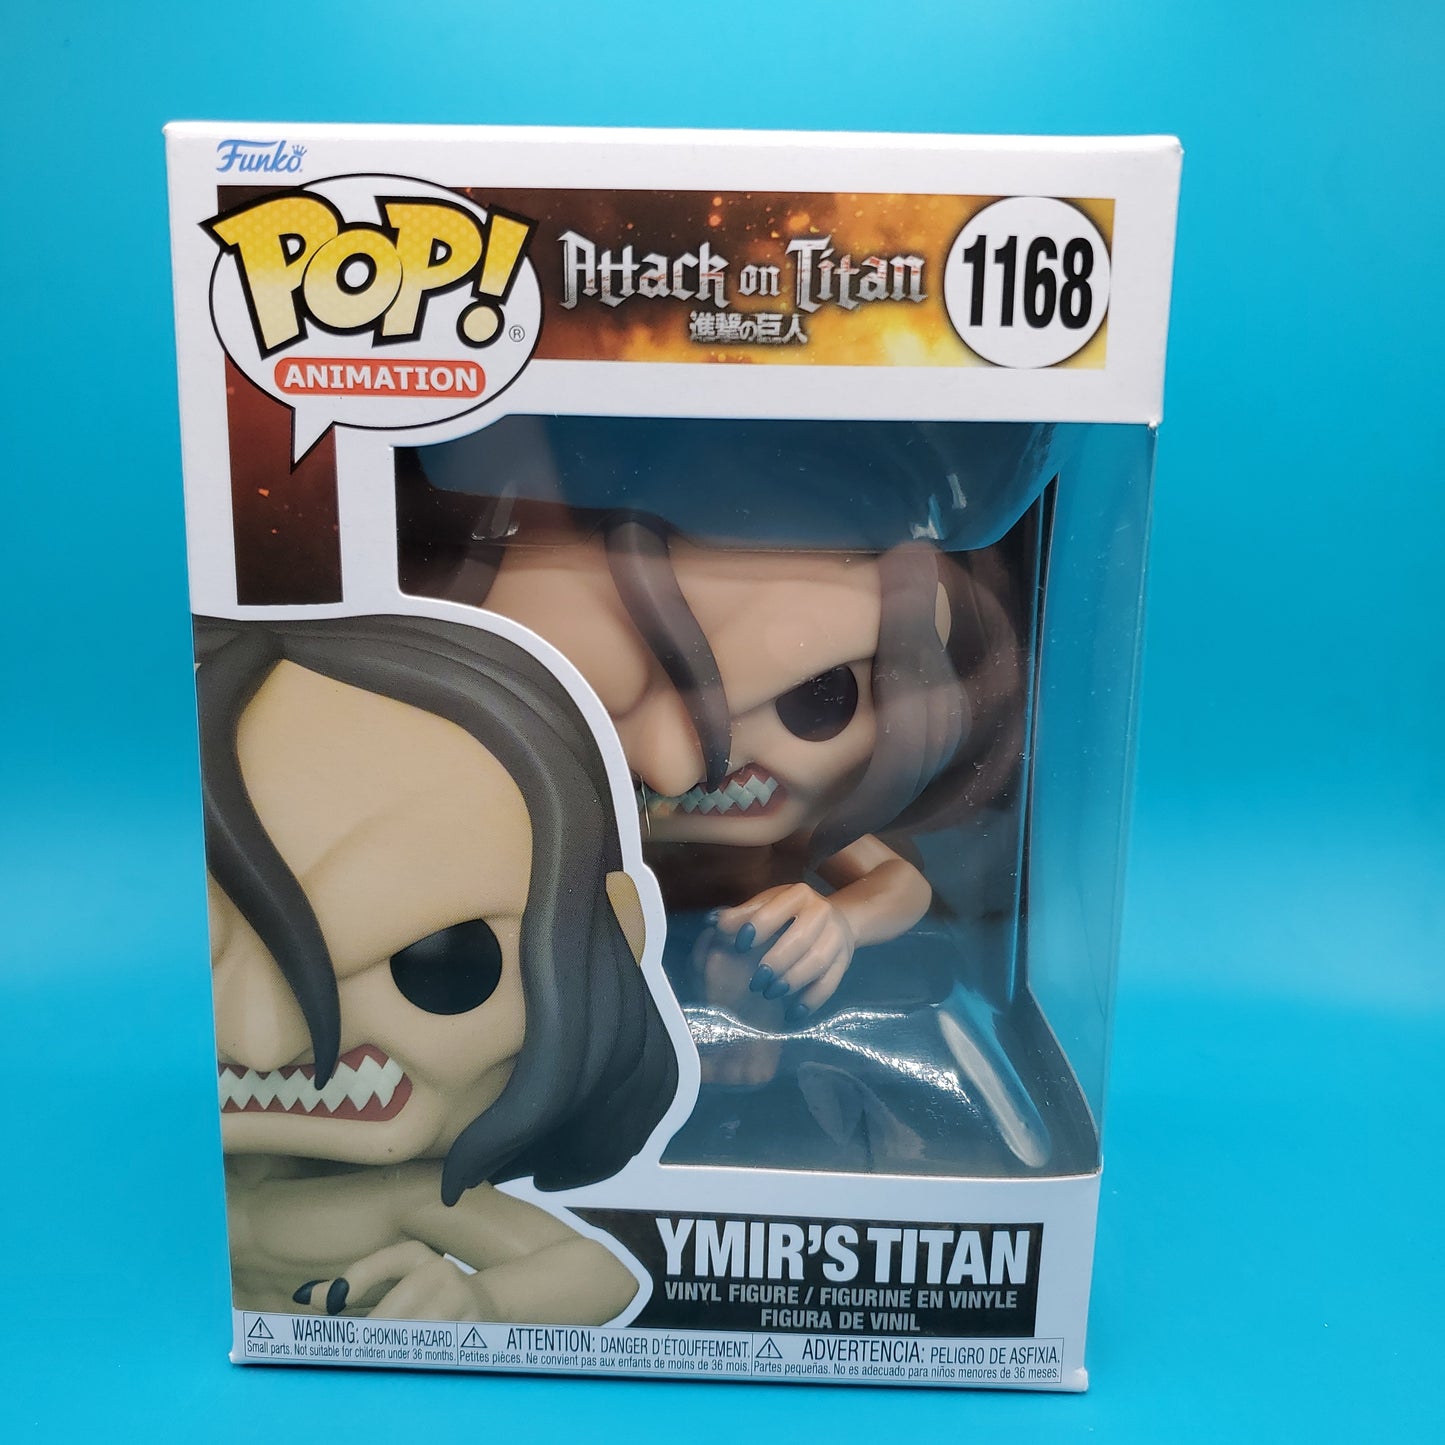 Ymir's Titan - 1168 - Attack on Titan